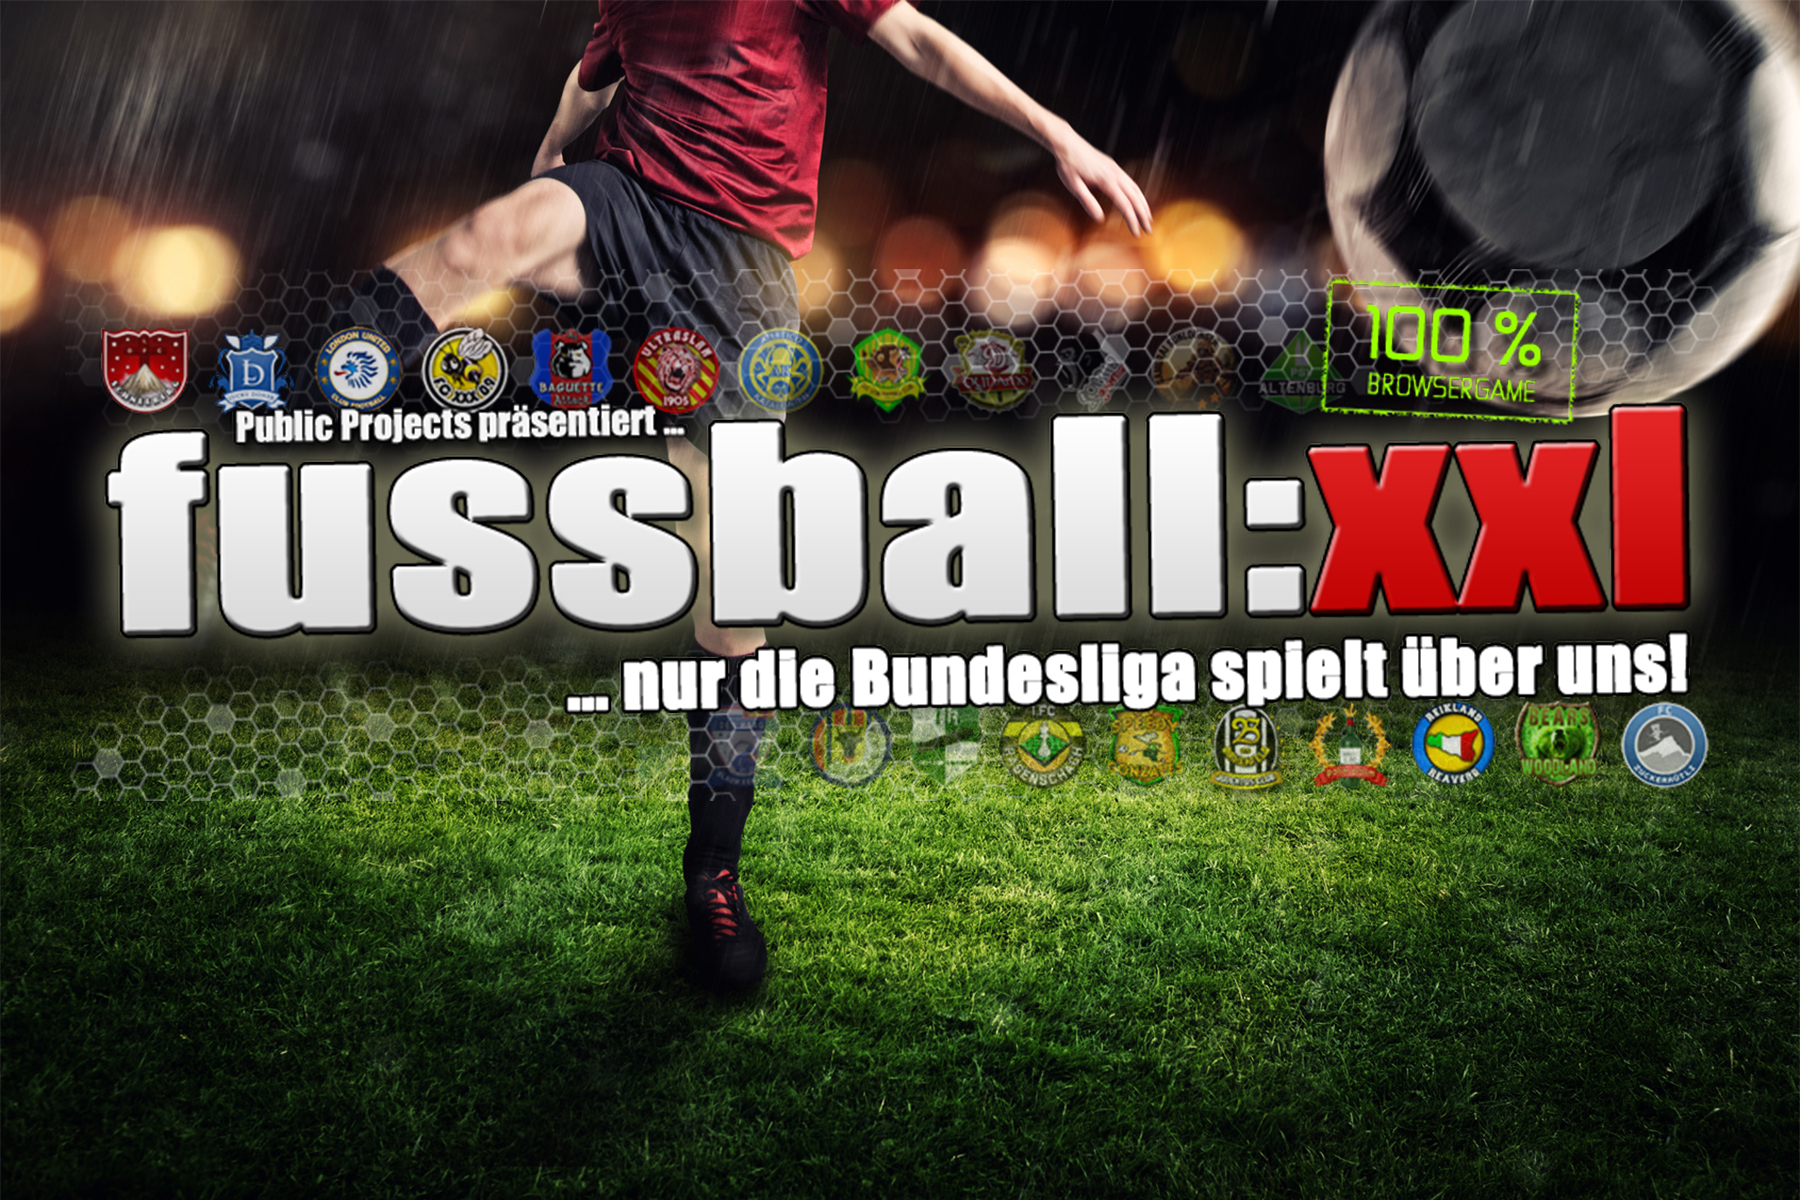 (c) Fussball-xxl.de